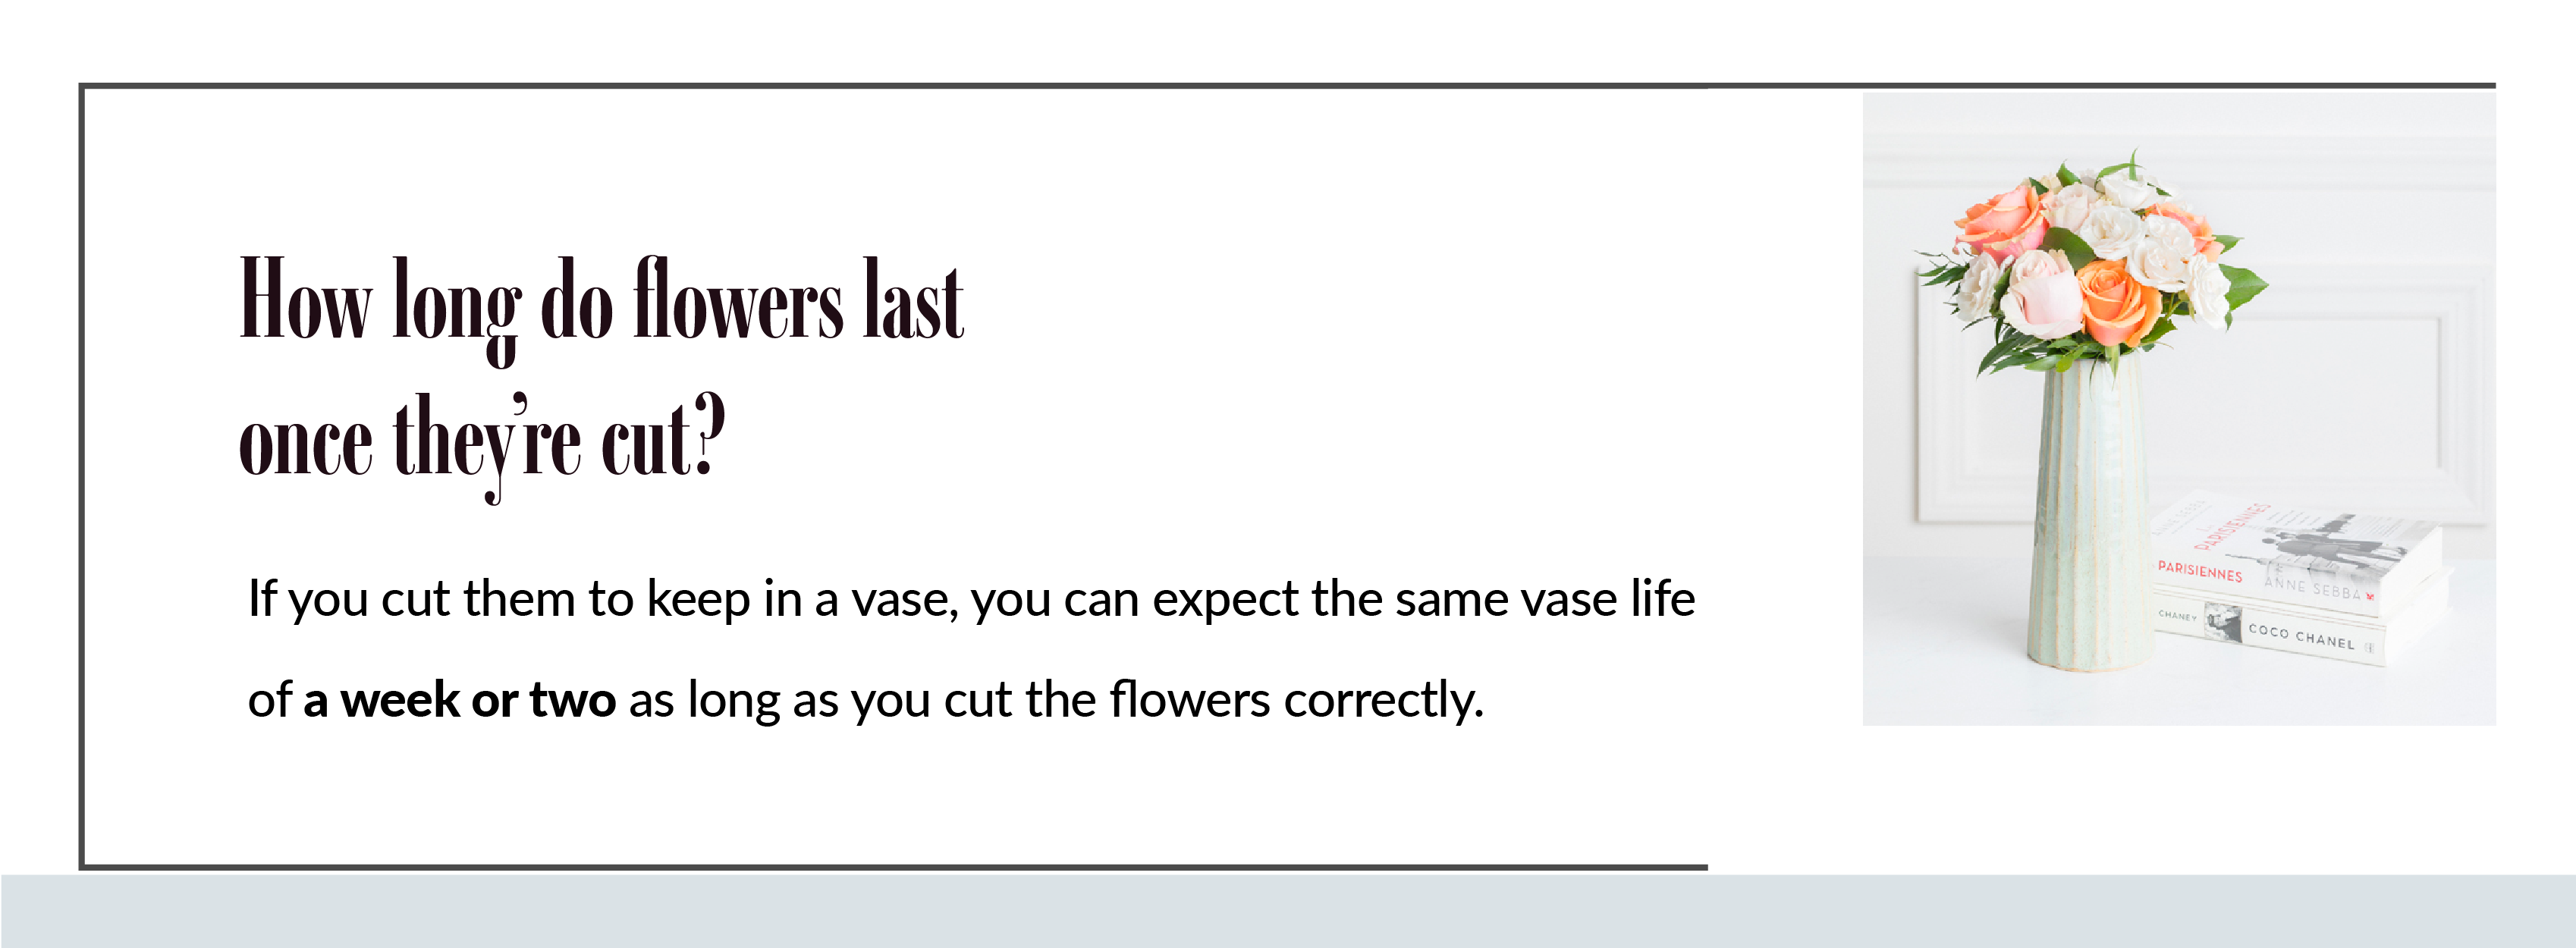 How long do flowers last once cut